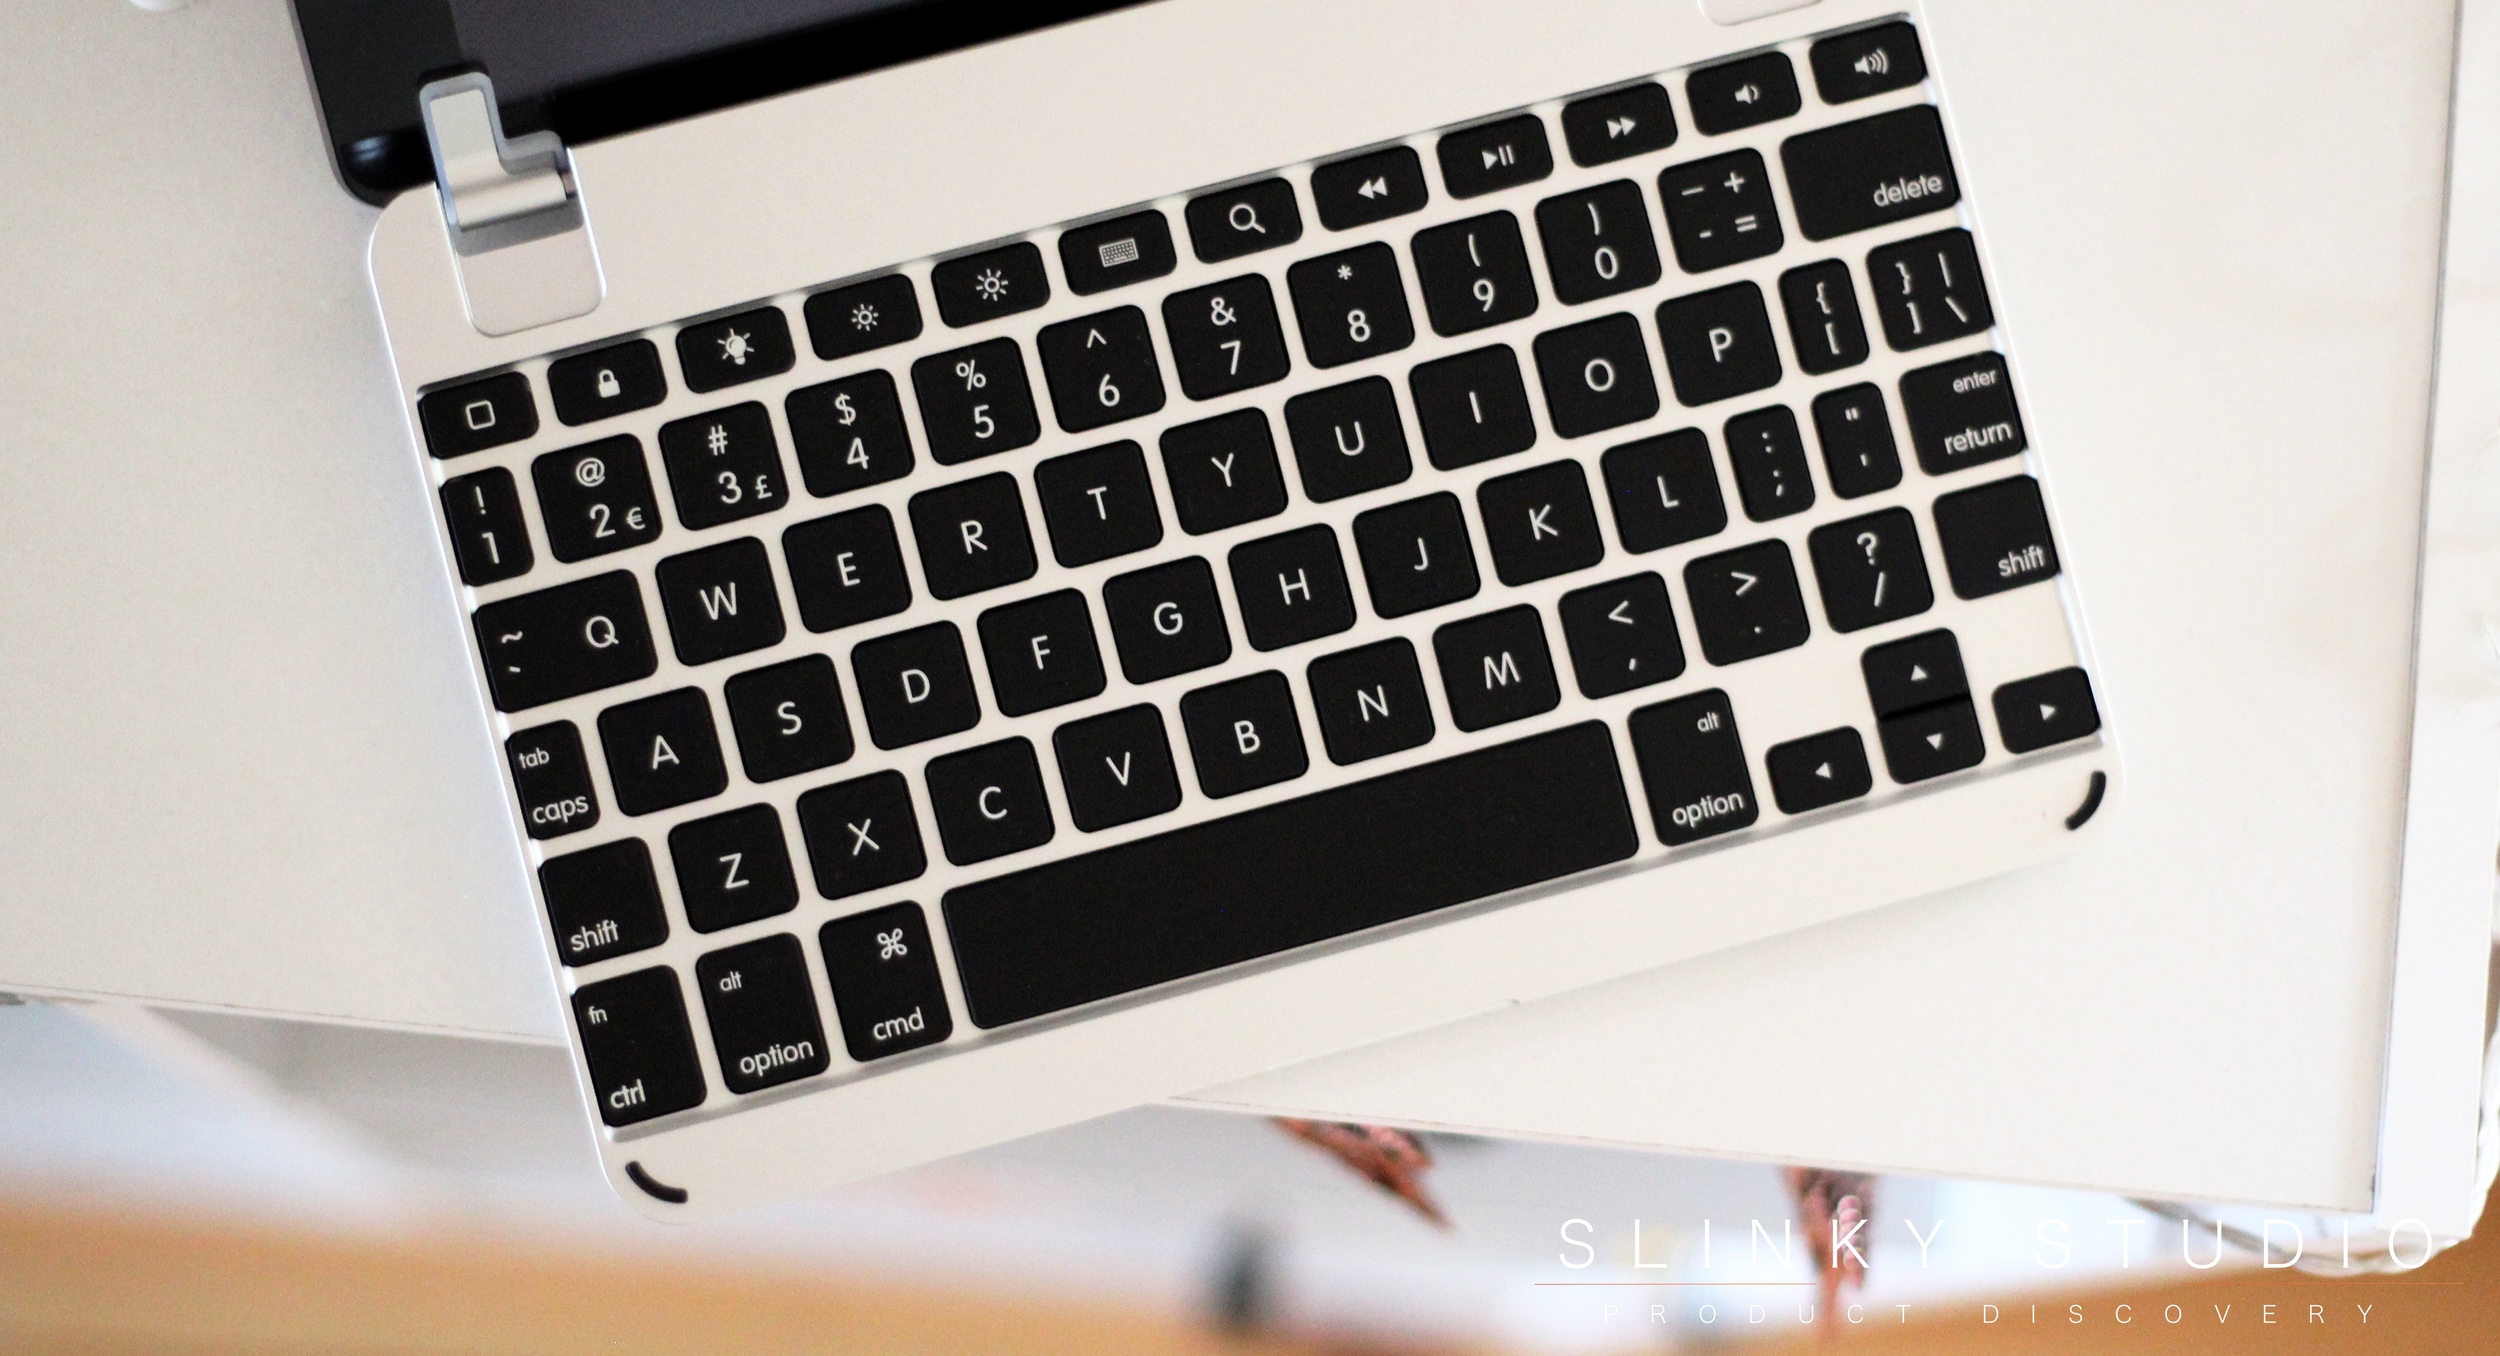 BrydgeMini Keyboard for iPad 1:2:3 Chiclet Full Sized Keyboard.jpg